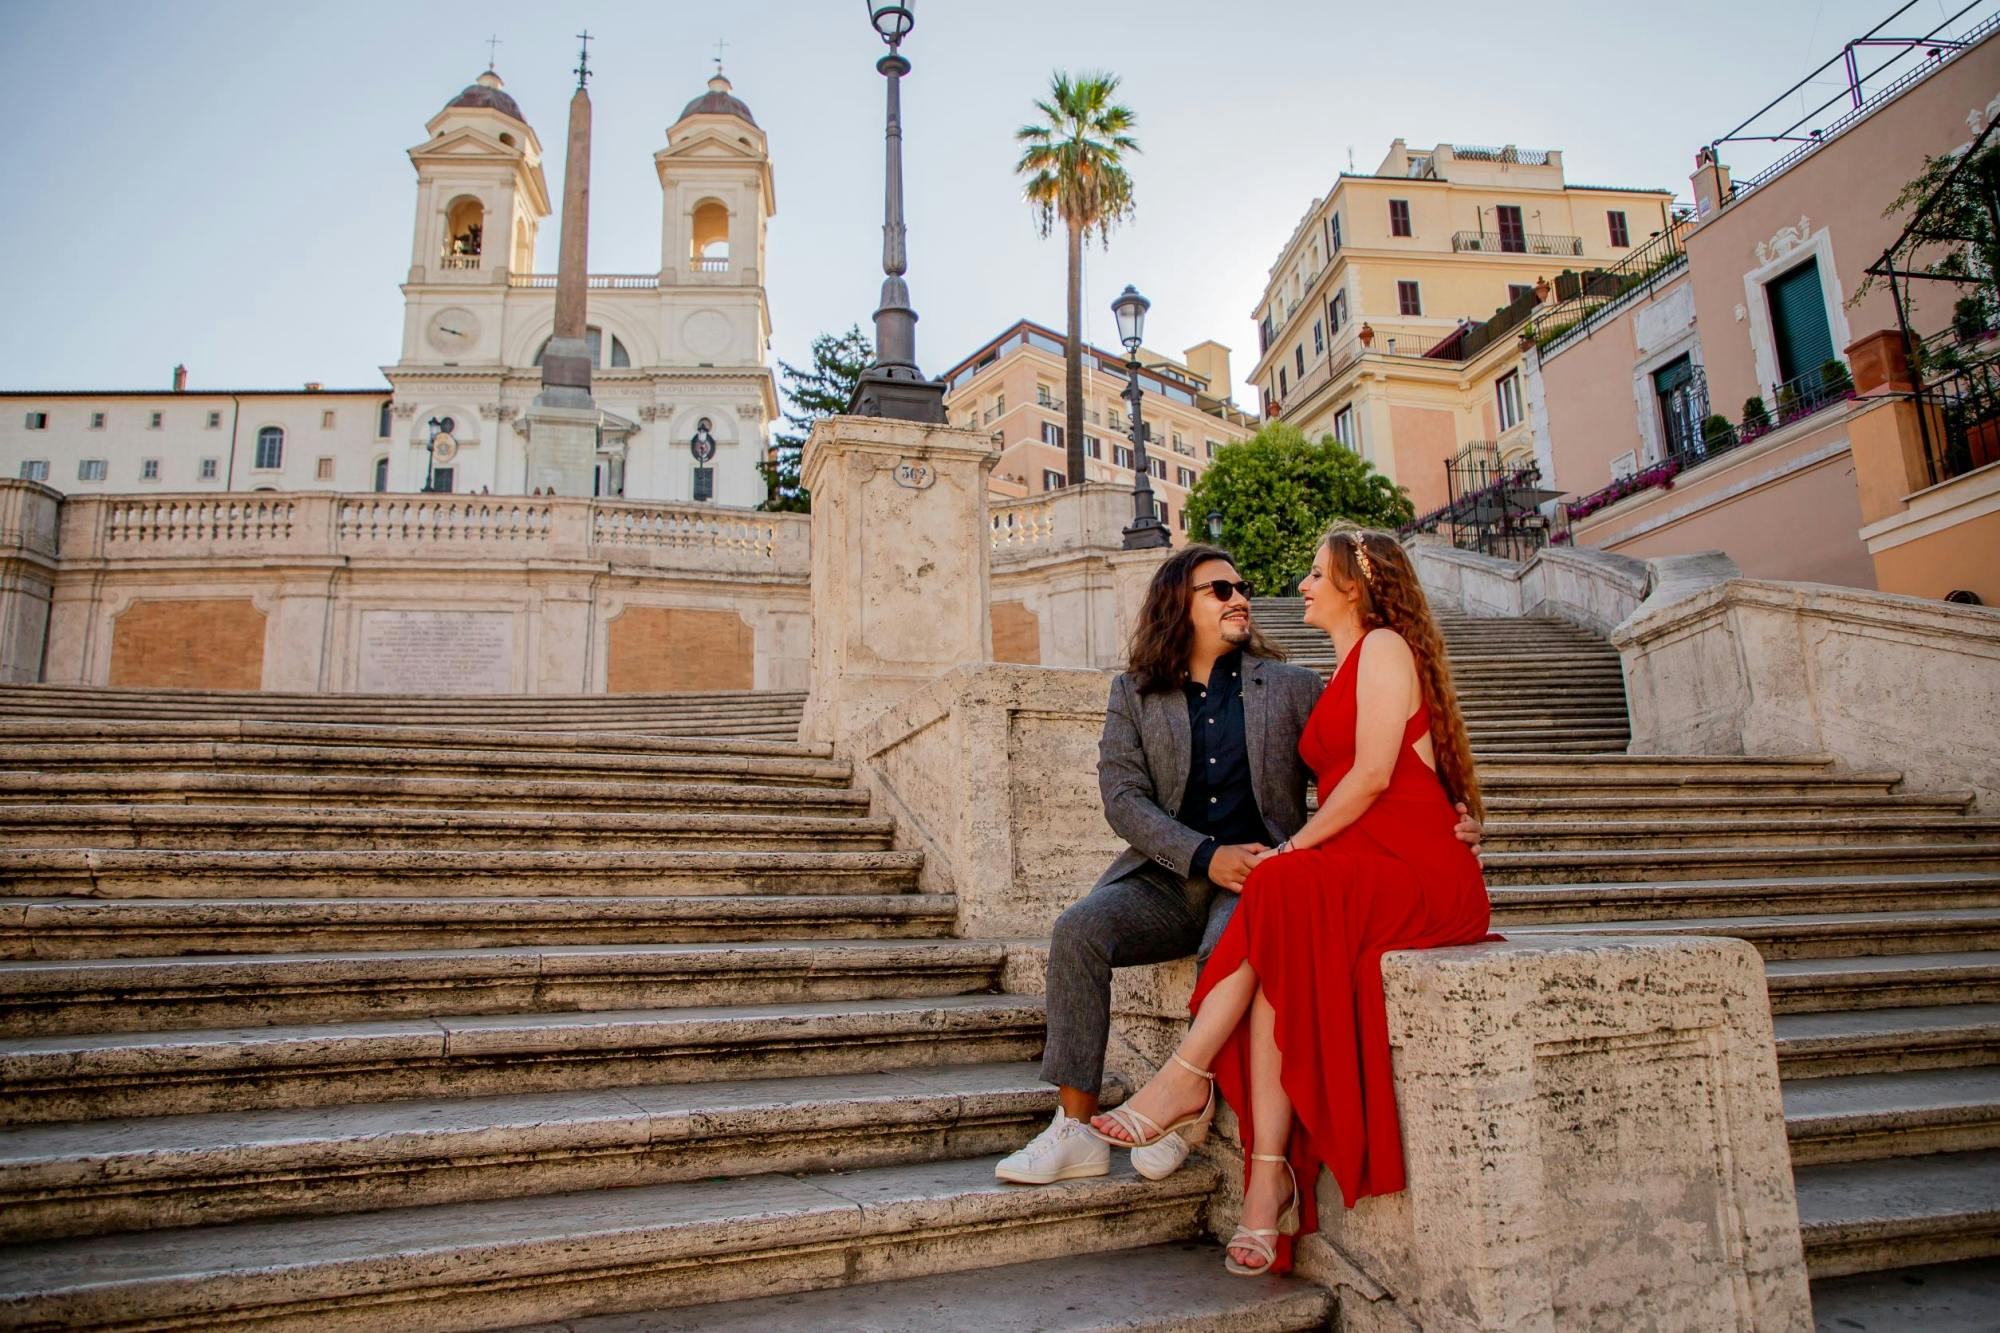 Rome Spanish Steps professional photoshoot experience